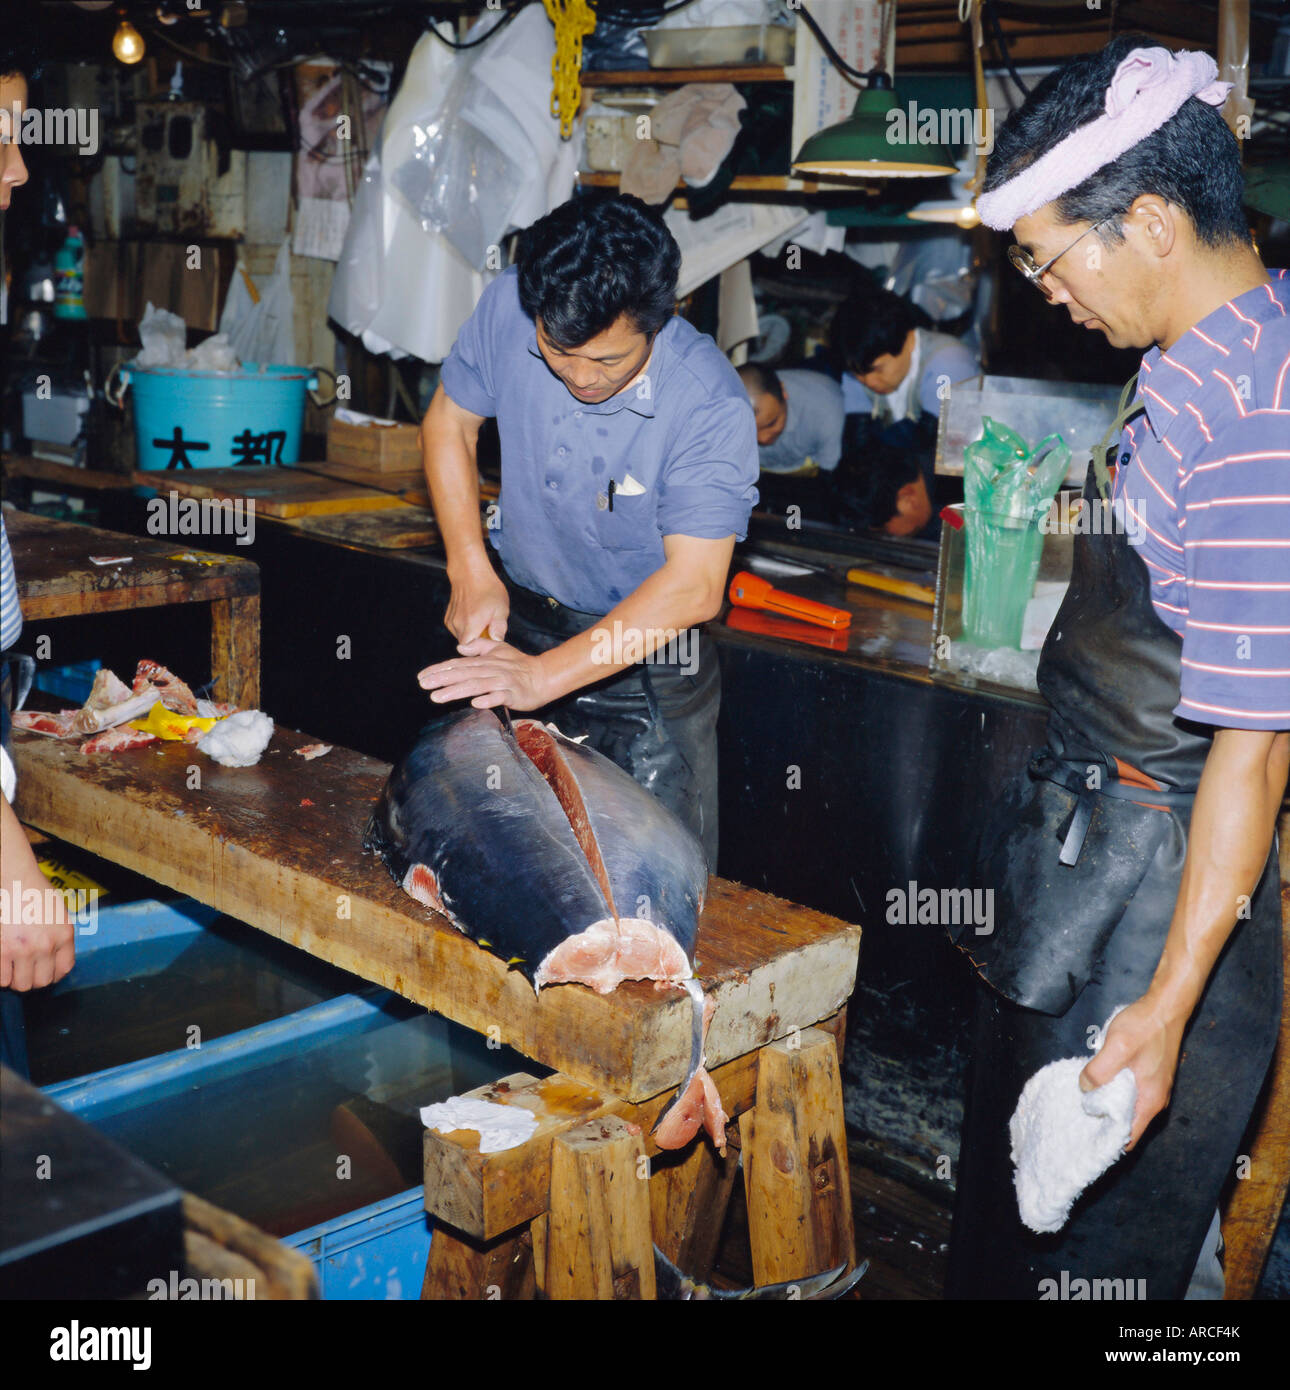 Cutting tuna fish, morning fish market, Tsukiji, Tokyo, Japan Stock Photo